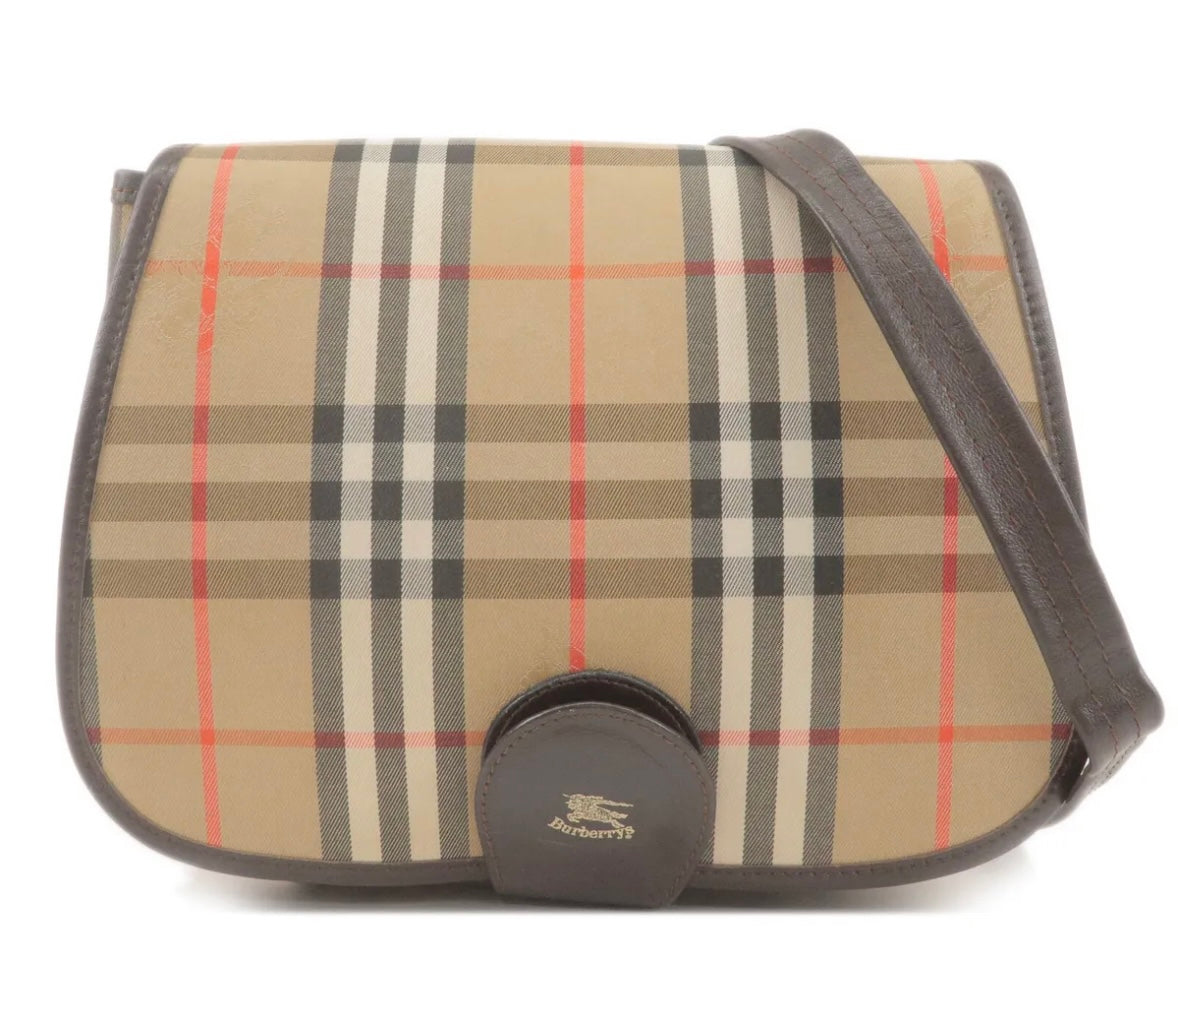 Burberry Crossbody Bags & Handbags for Women, Authenticity Guaranteed